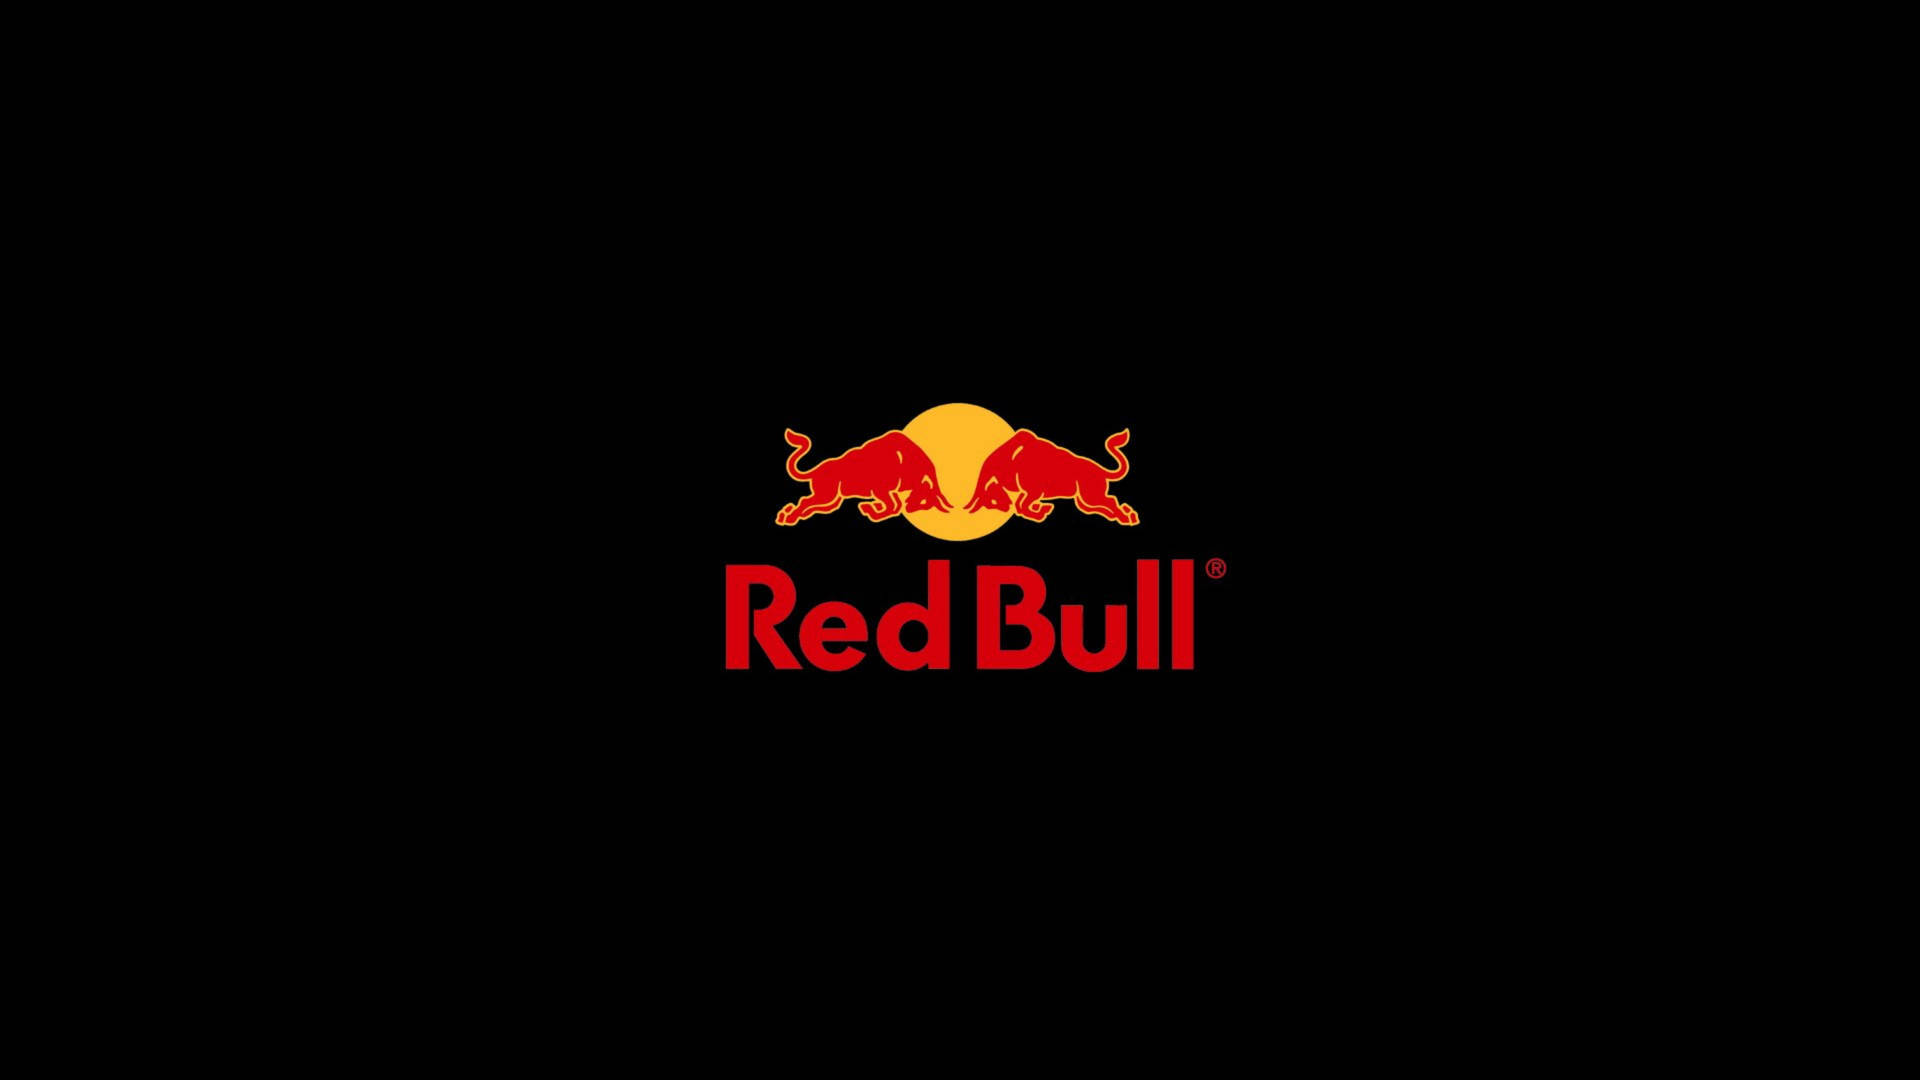 Red Bull Black Theme Background